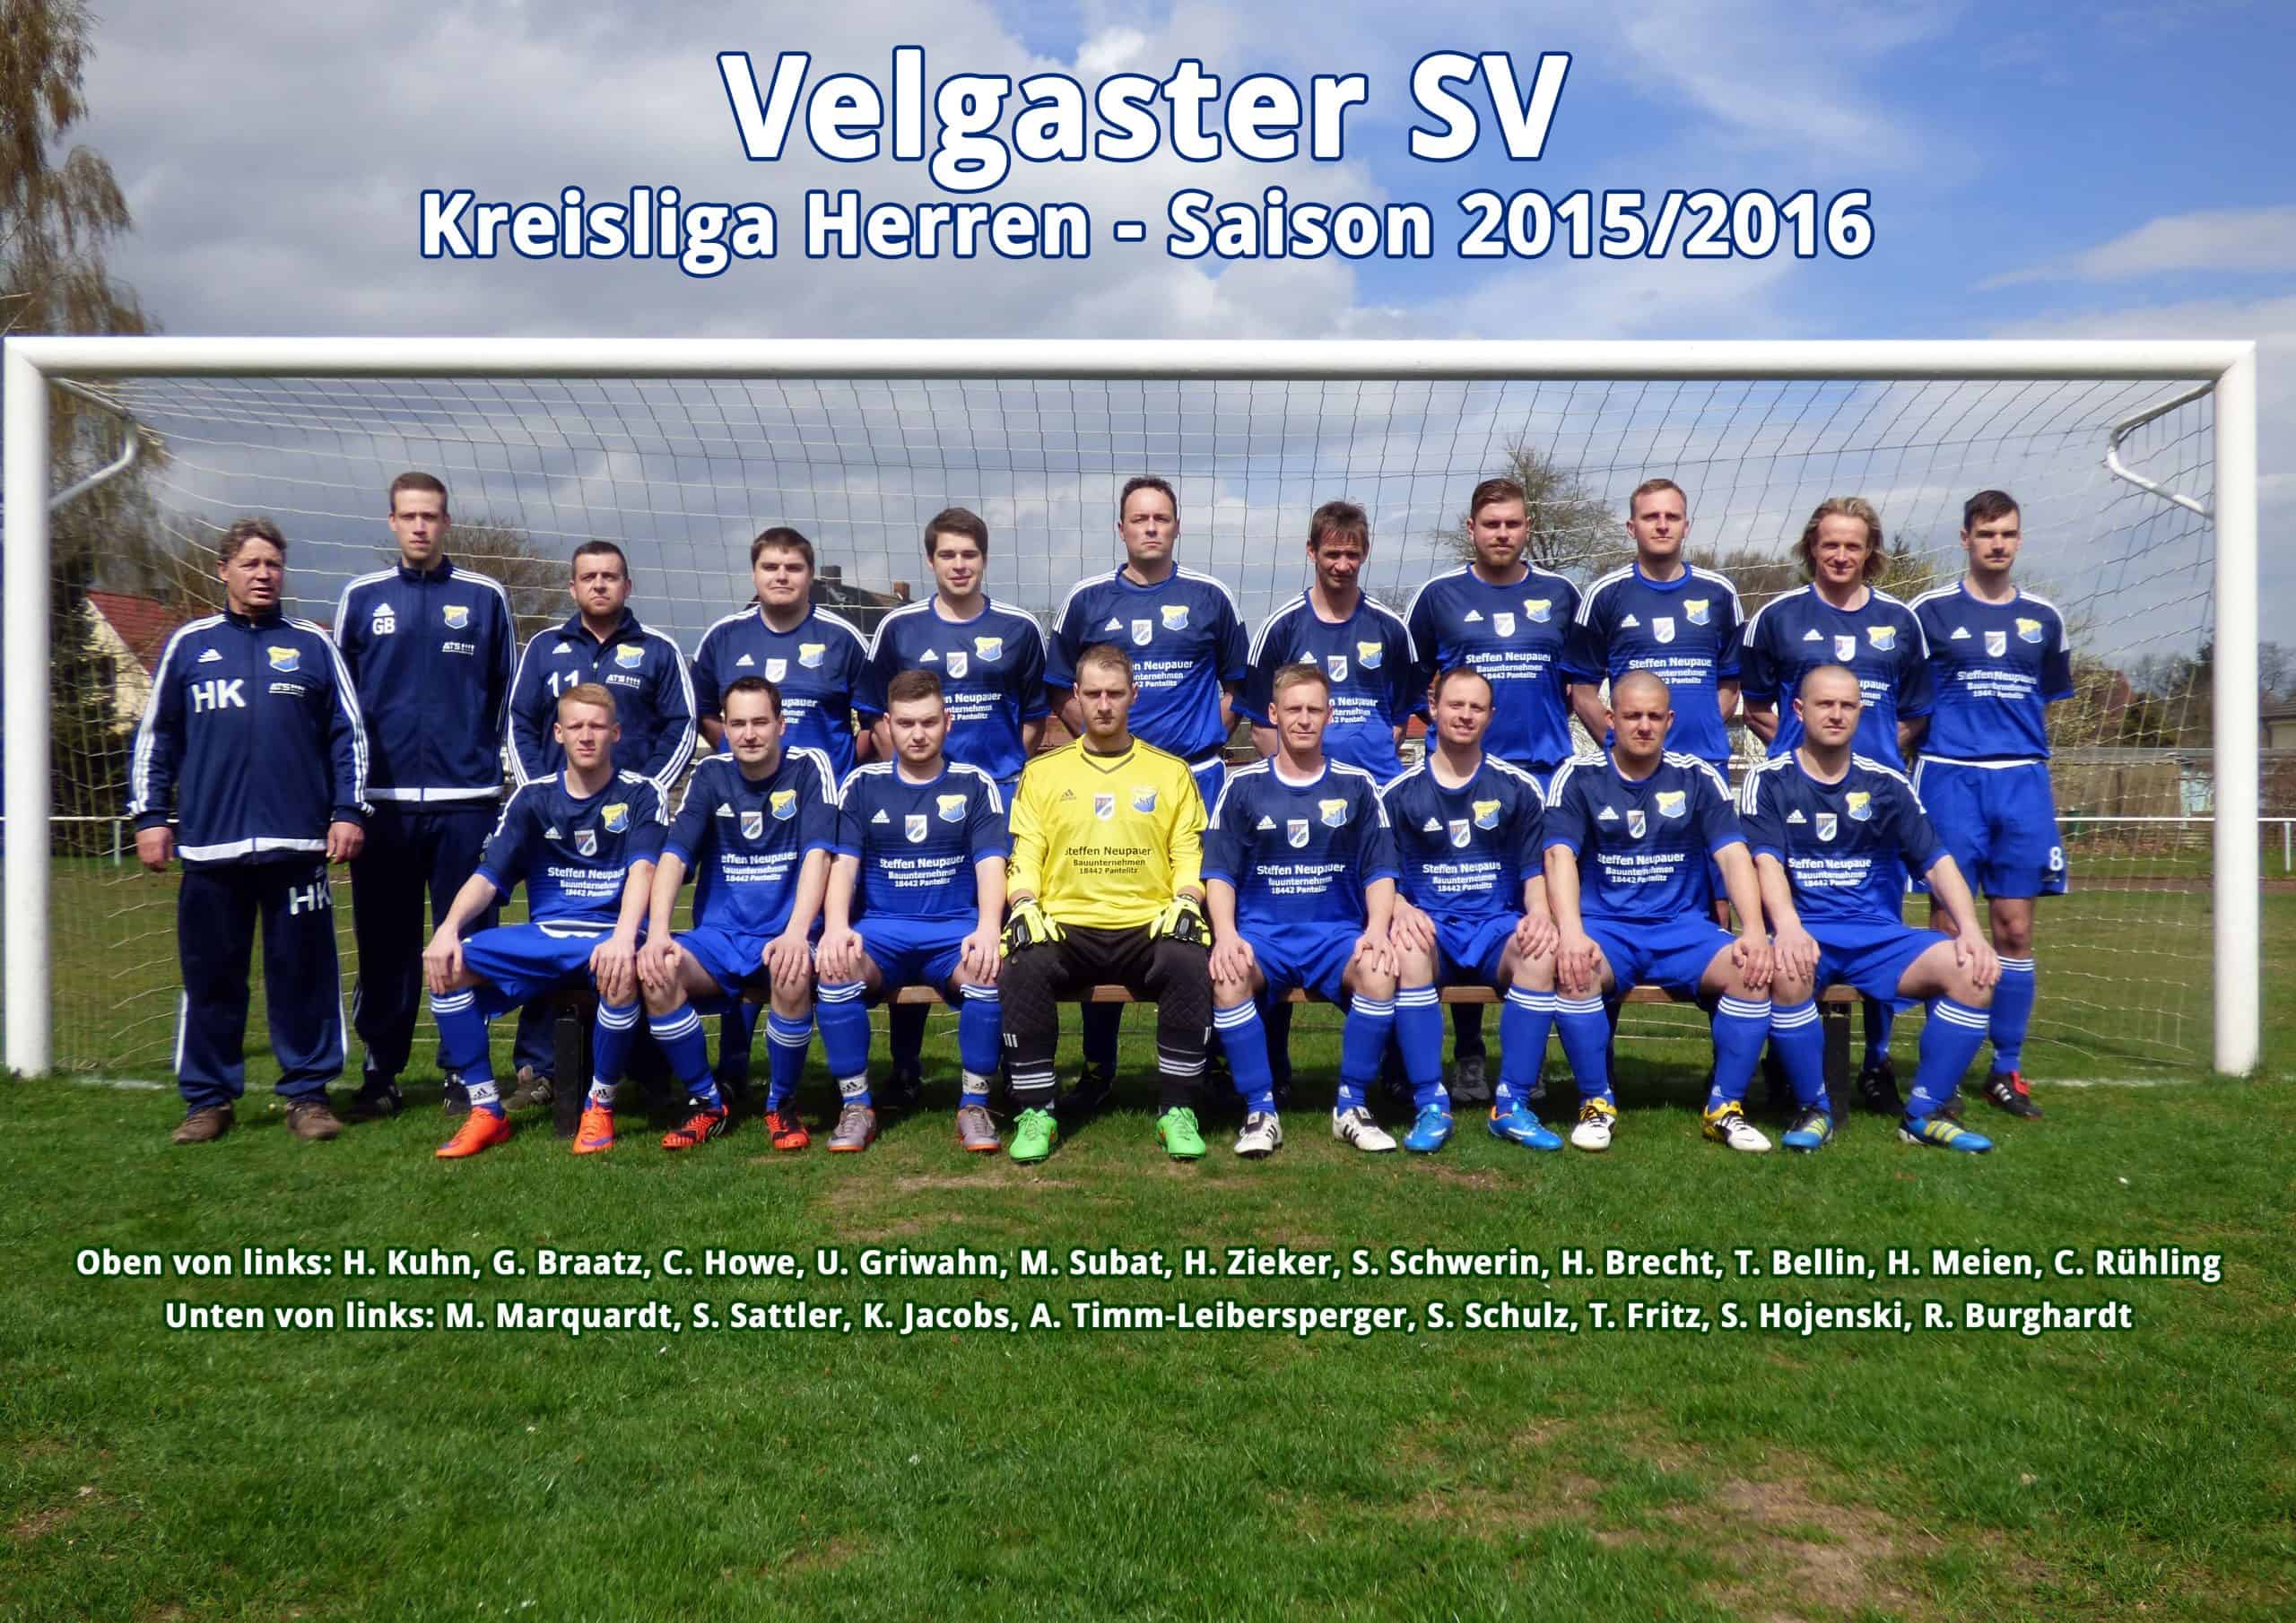 Velgaster SV - VSV 2015 2016 scaled